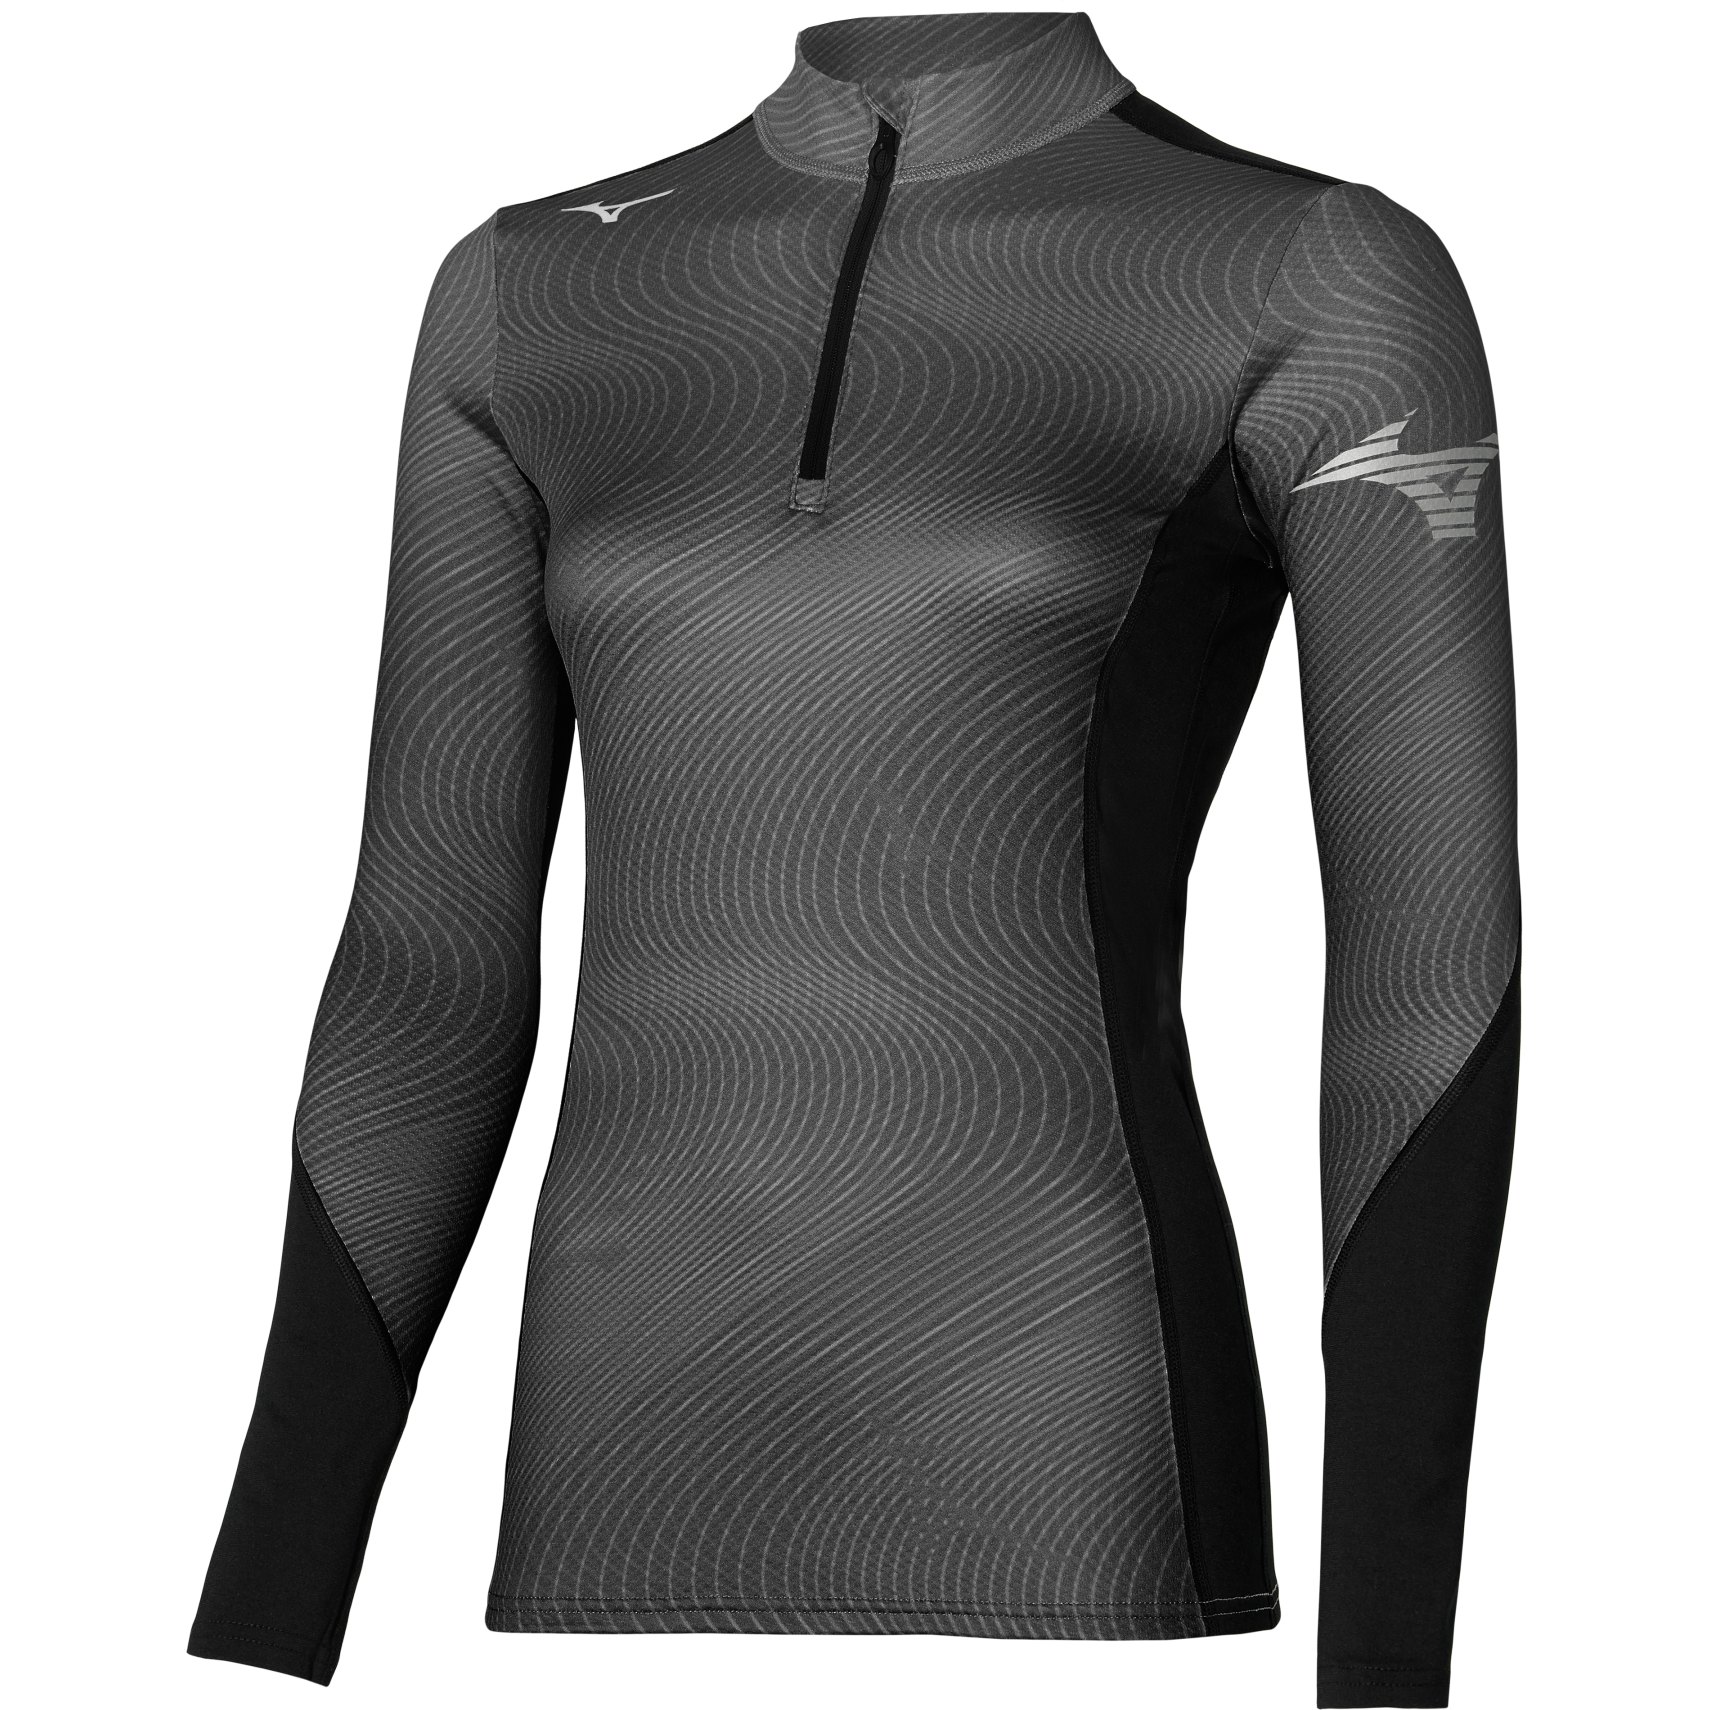 Image of Mizuno Virtual Body G3 Half Zip Long Sleeve Shirt Women - Black